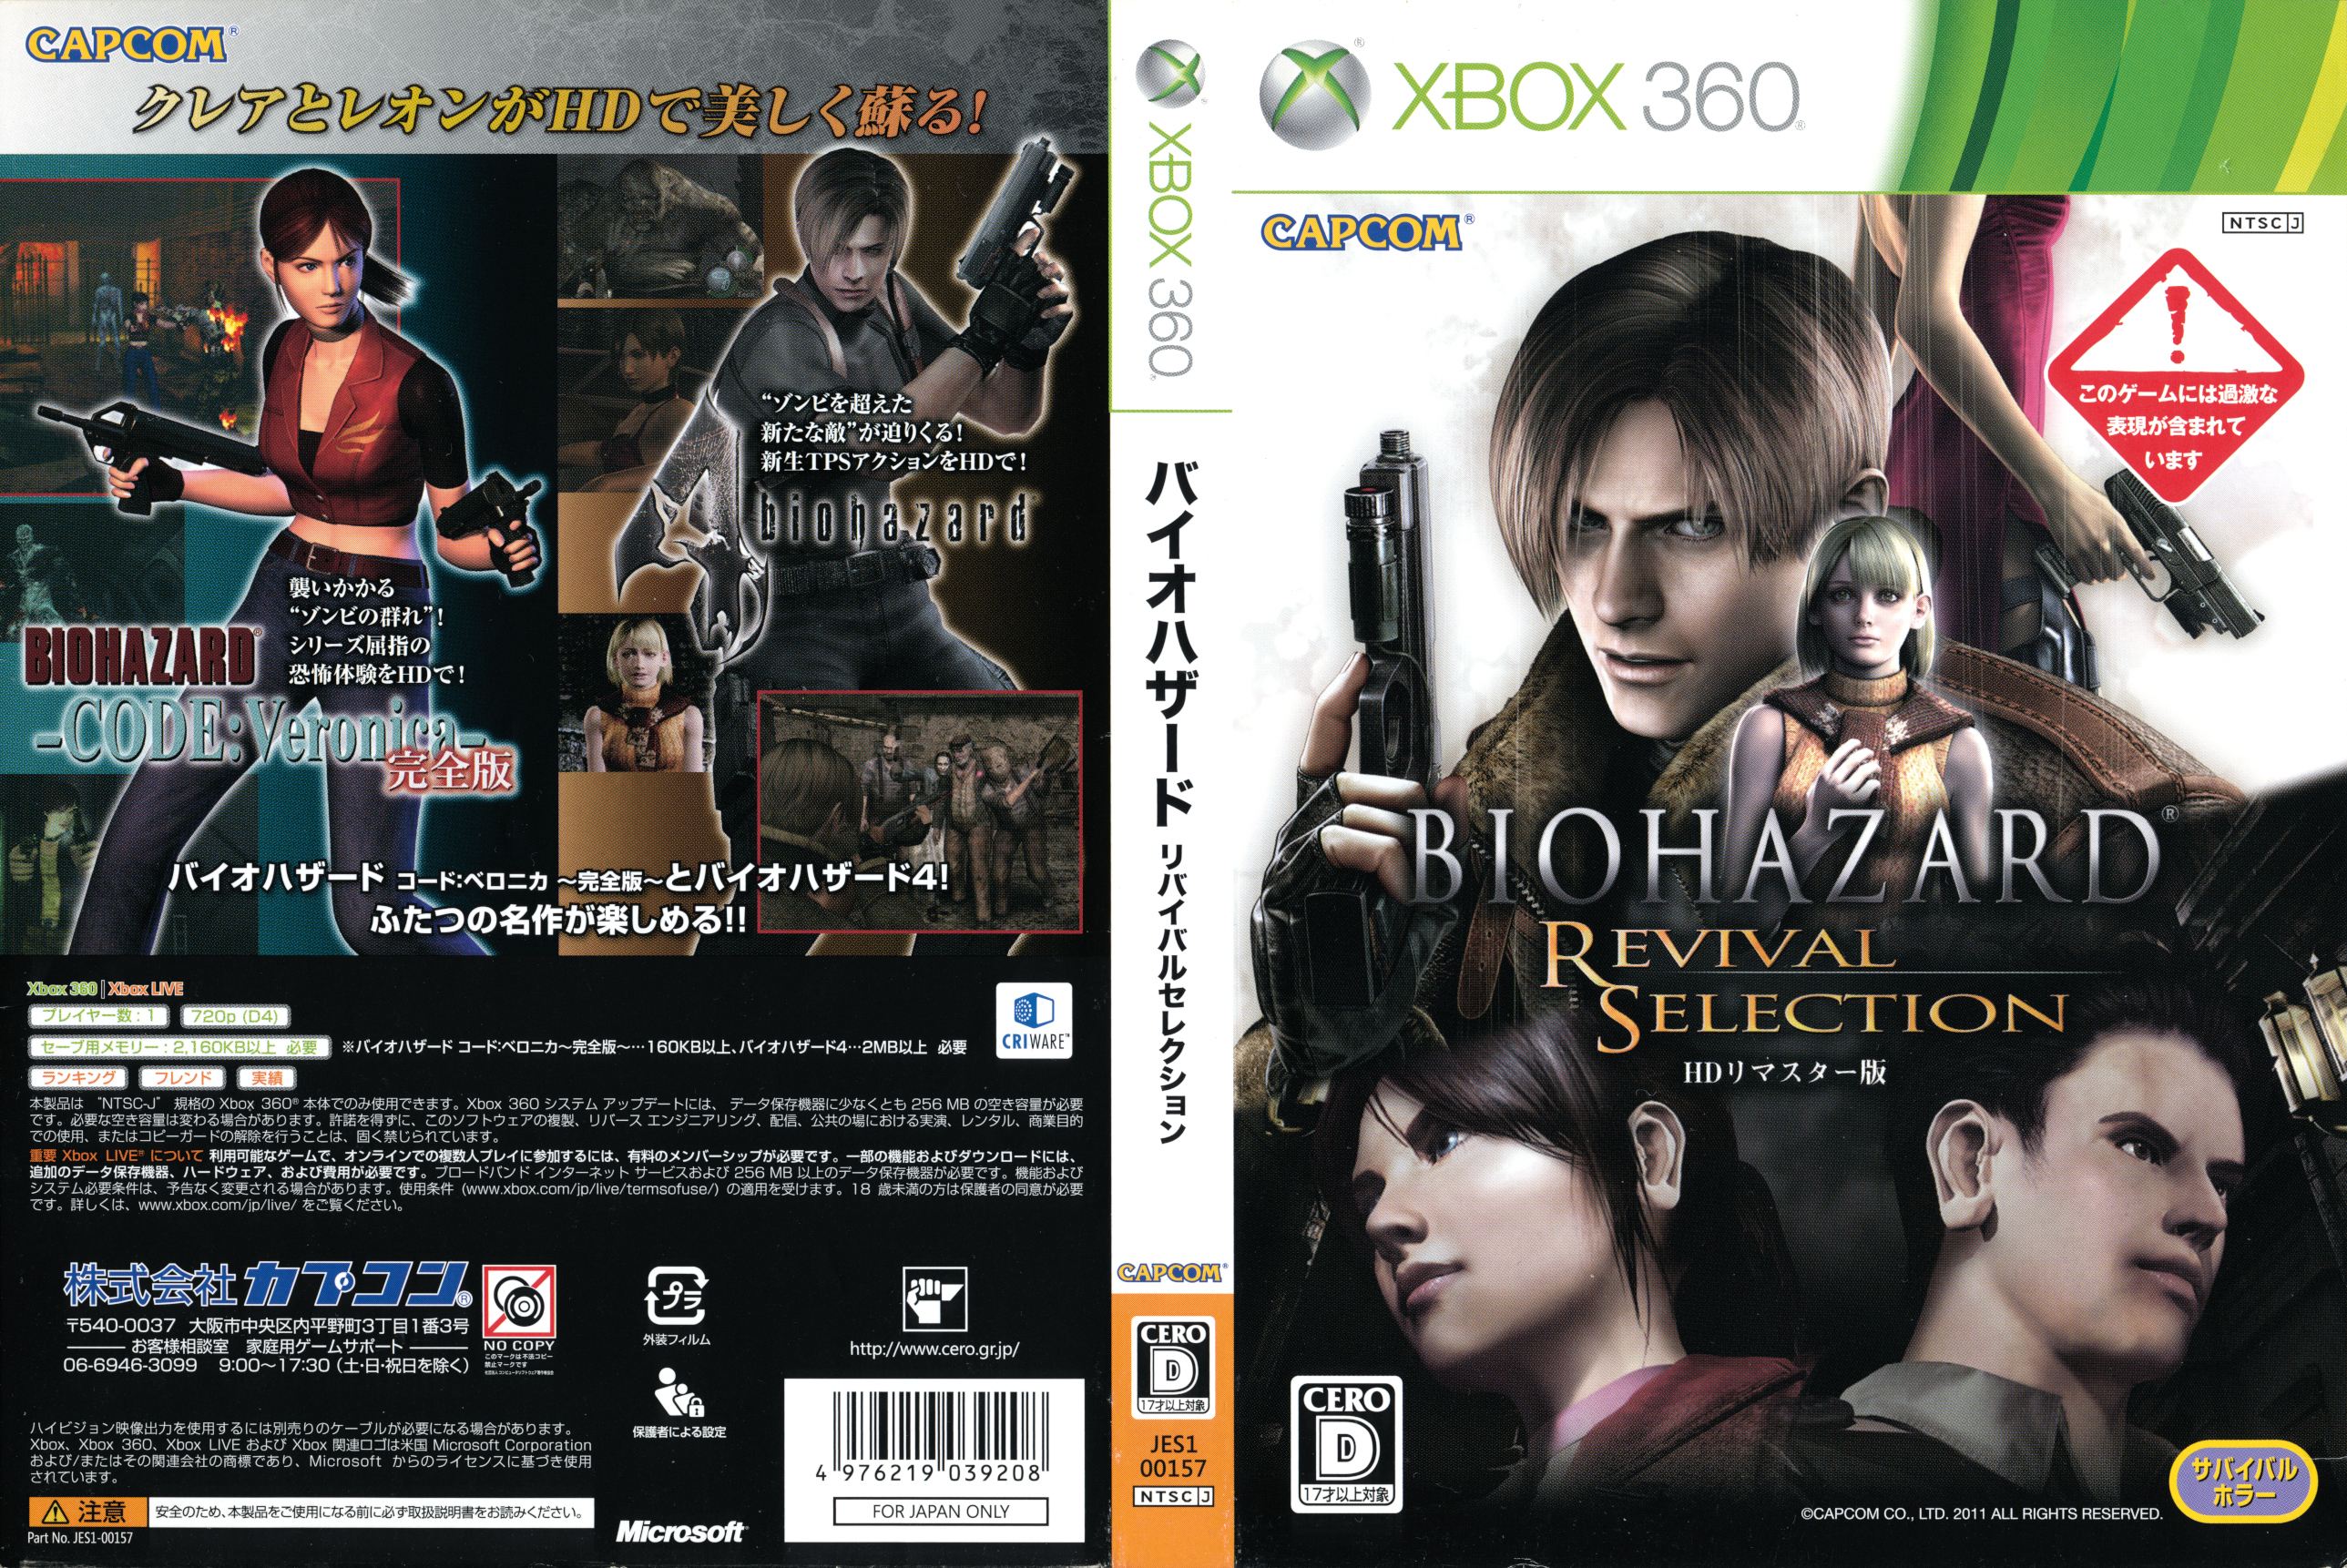 Biohazard Revival Selection Xbox 360 NTSC-J — Complete Art Scans